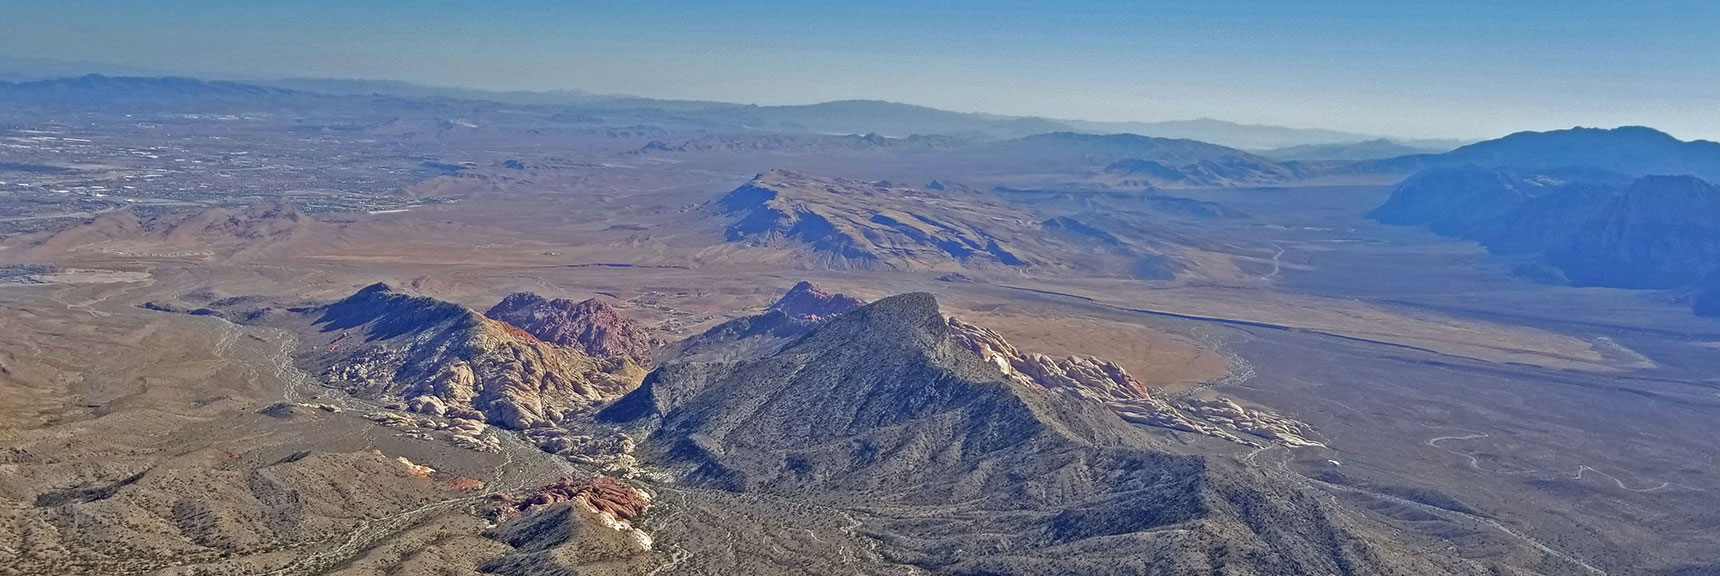 Calico Basin, Turtlehead Peak and Red Rock Park from La Madre Mt Summit | La Madre Mountain,, El Padre Mountain, Burnt Peak | La Madre Mountains Wilderness, Nevada